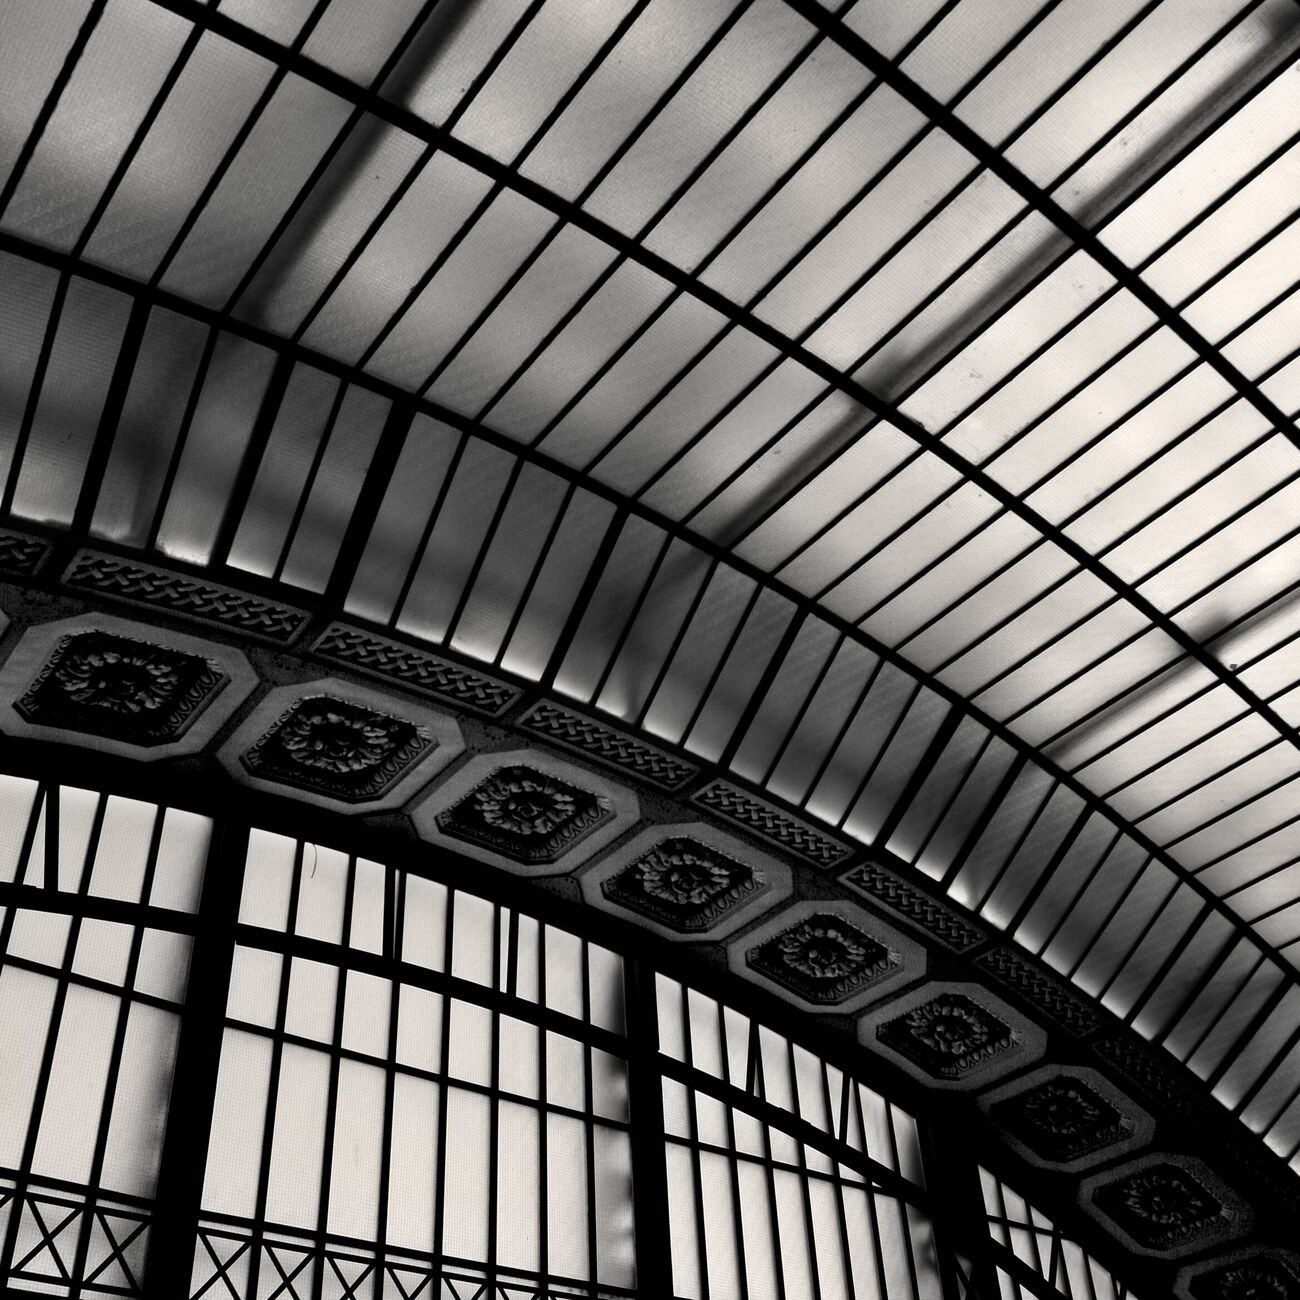 Orsay Museum Glass Roof I, Paris, France. Février 2005. Ref-561 - Denis Olivier Photographie d'Art